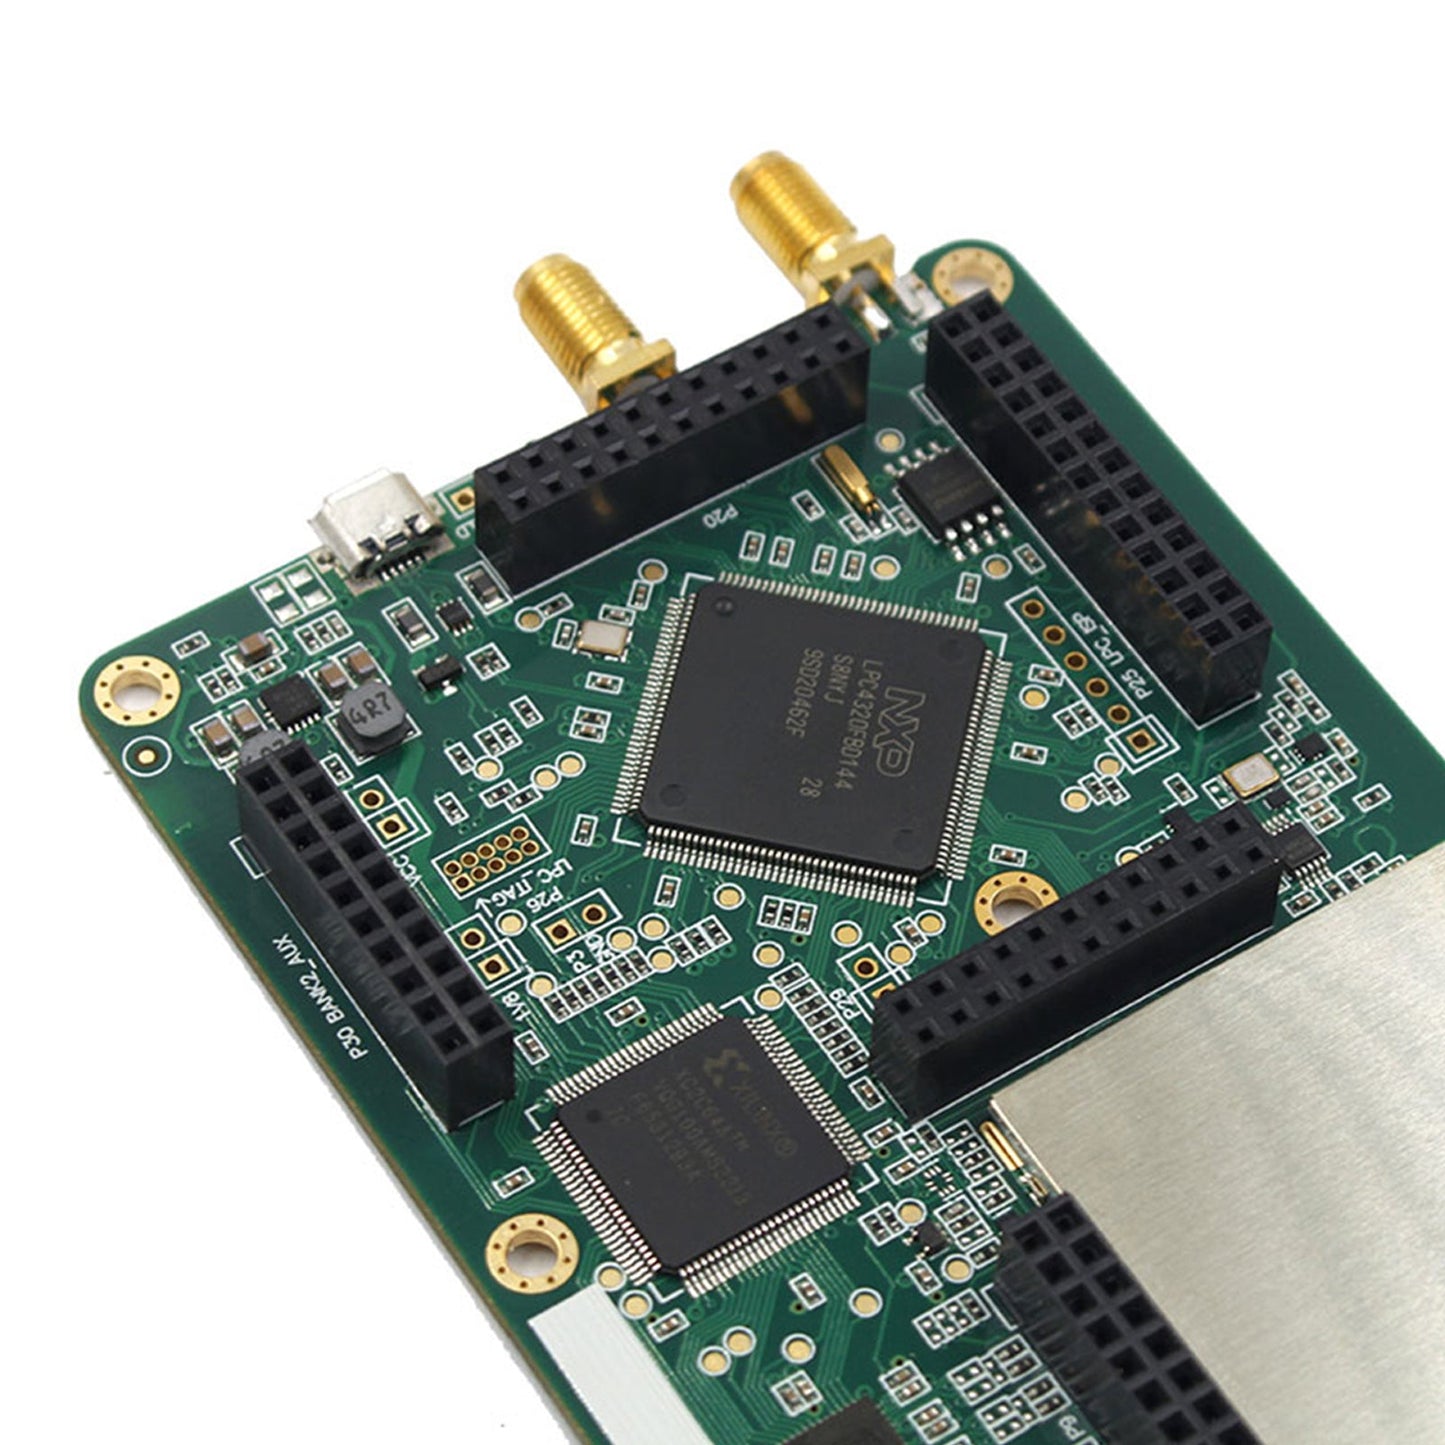 Upgraded HackRF One V1.7.3 Portapack H2 1MHz-6GHz SDR Software Defined Wireless